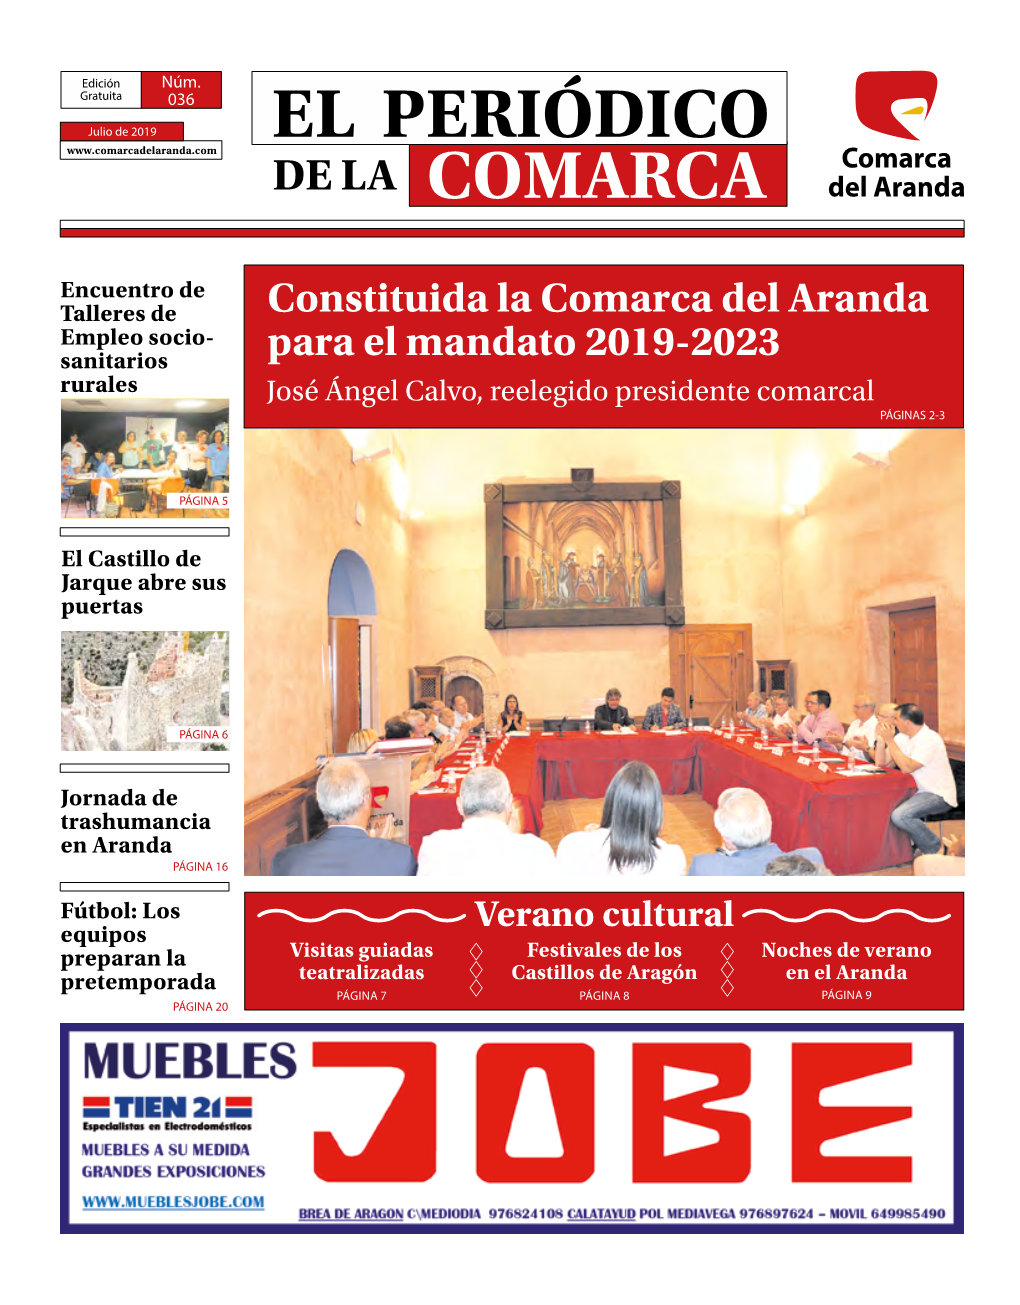 Constituida La Comarca Del Aranda Para El Mandato 2019-2023